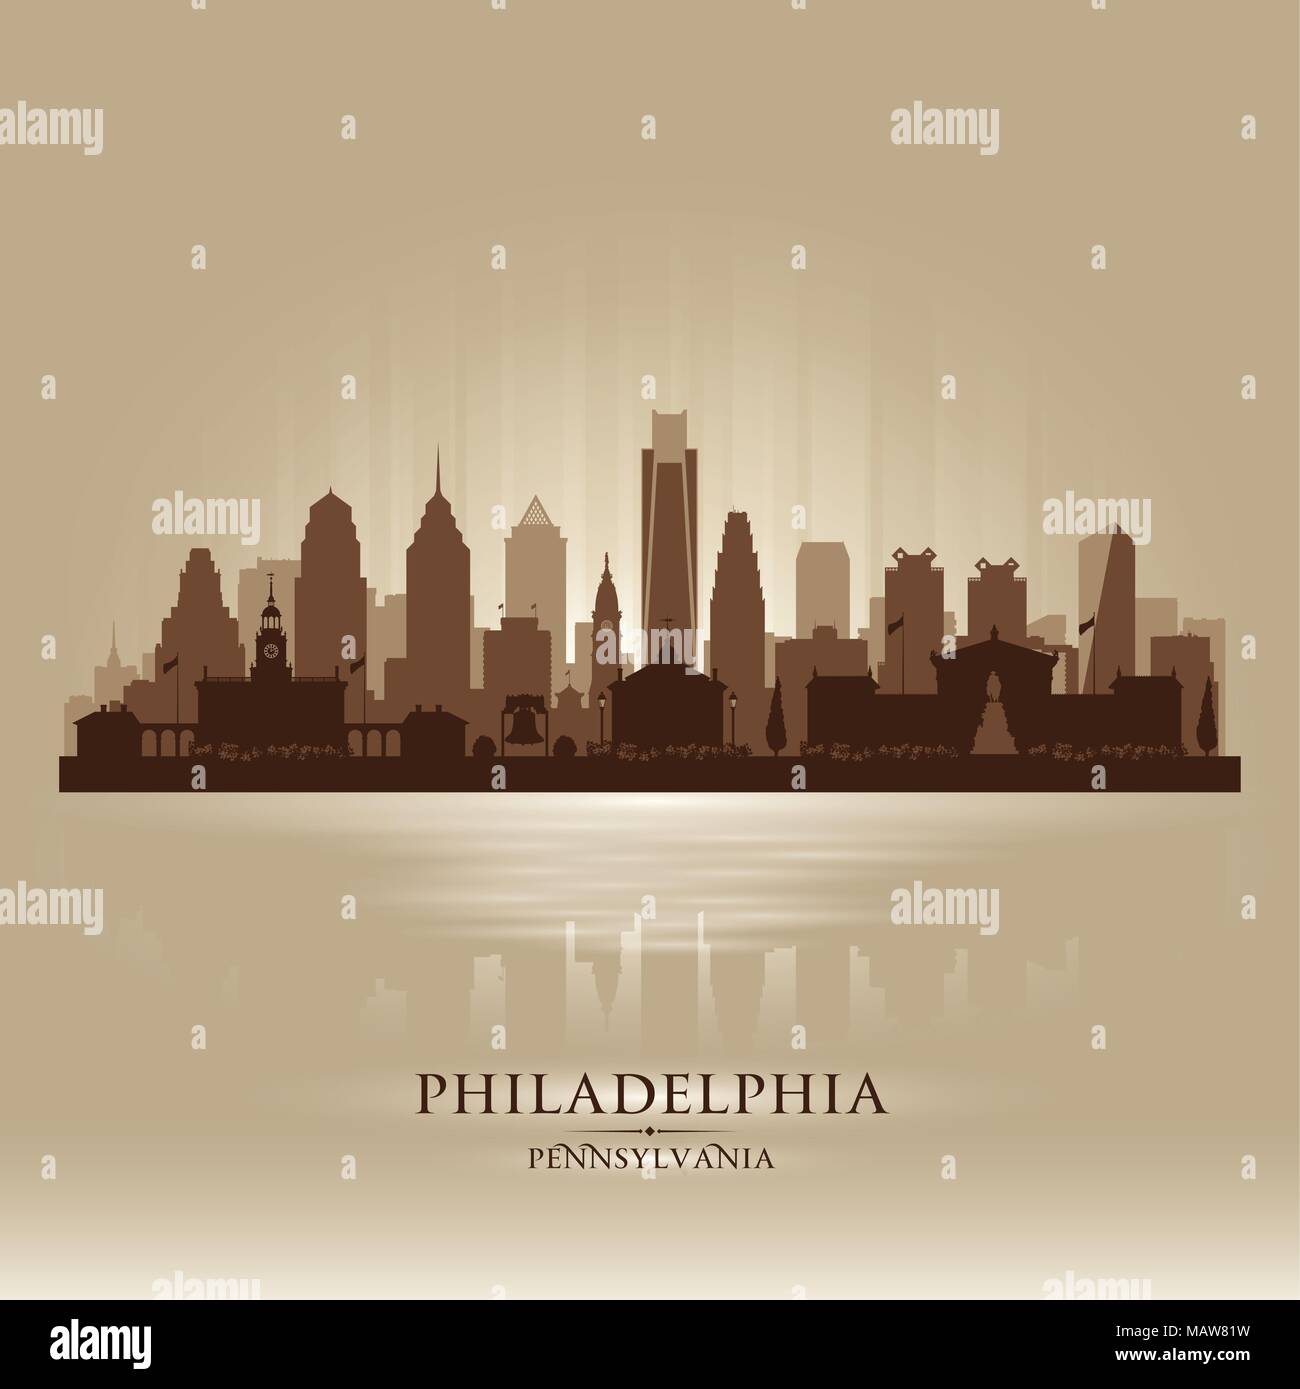 Philadelphia Pennsylvania  city skyline vector silhouette illustration Stock Vector